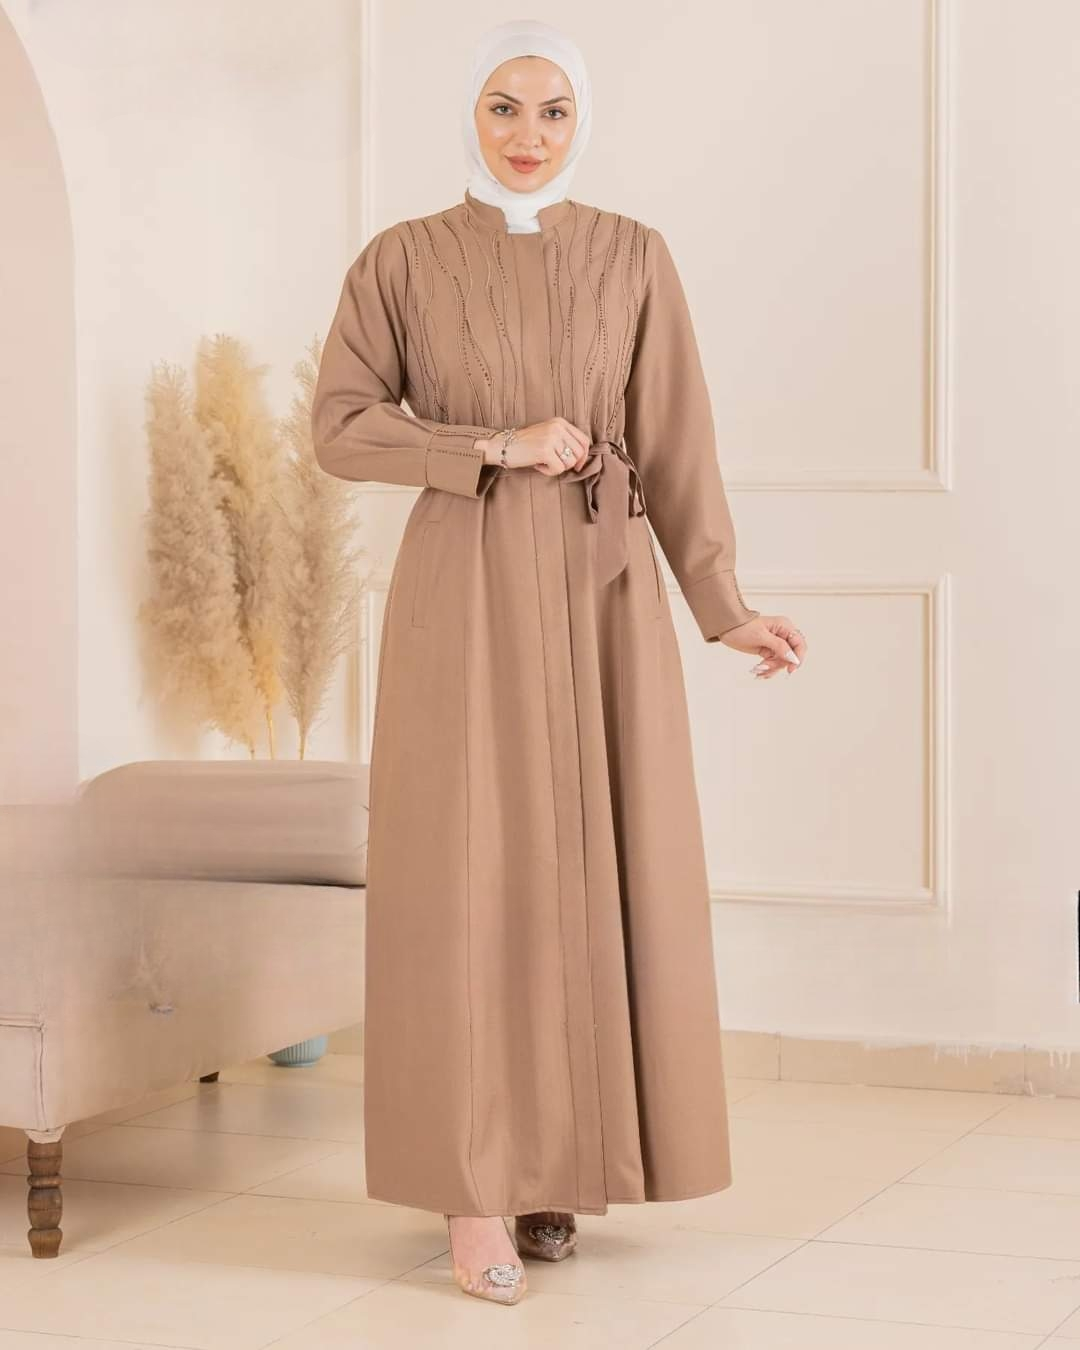 Jilbab Of Elegance - Modern High Quality Jilbab